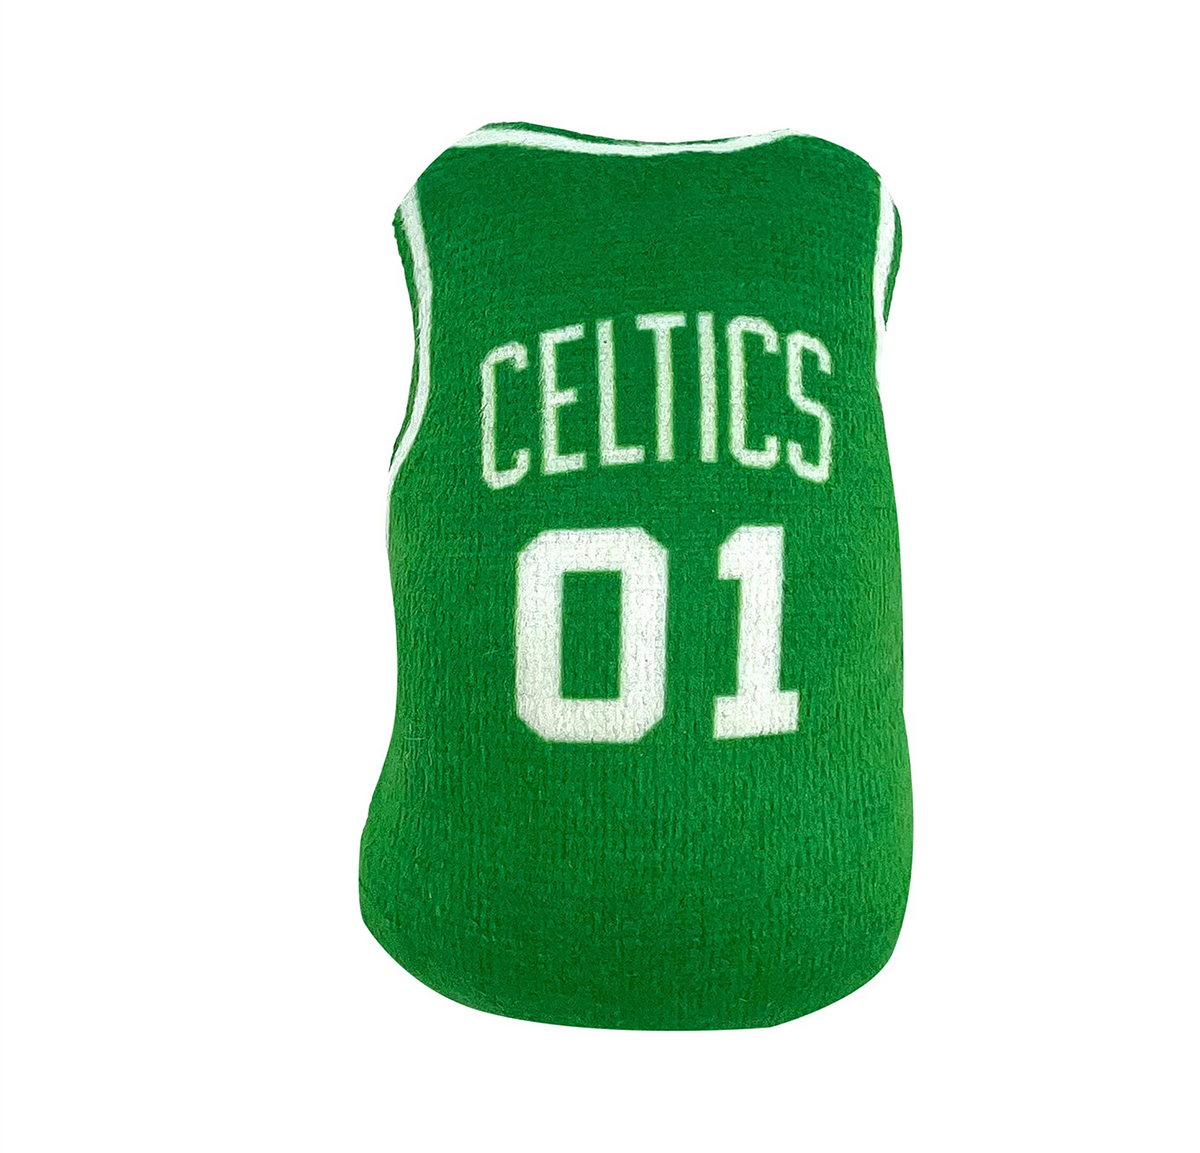 Boston Celtics 3 piece Catnip Toy Set - 3 Red Rovers